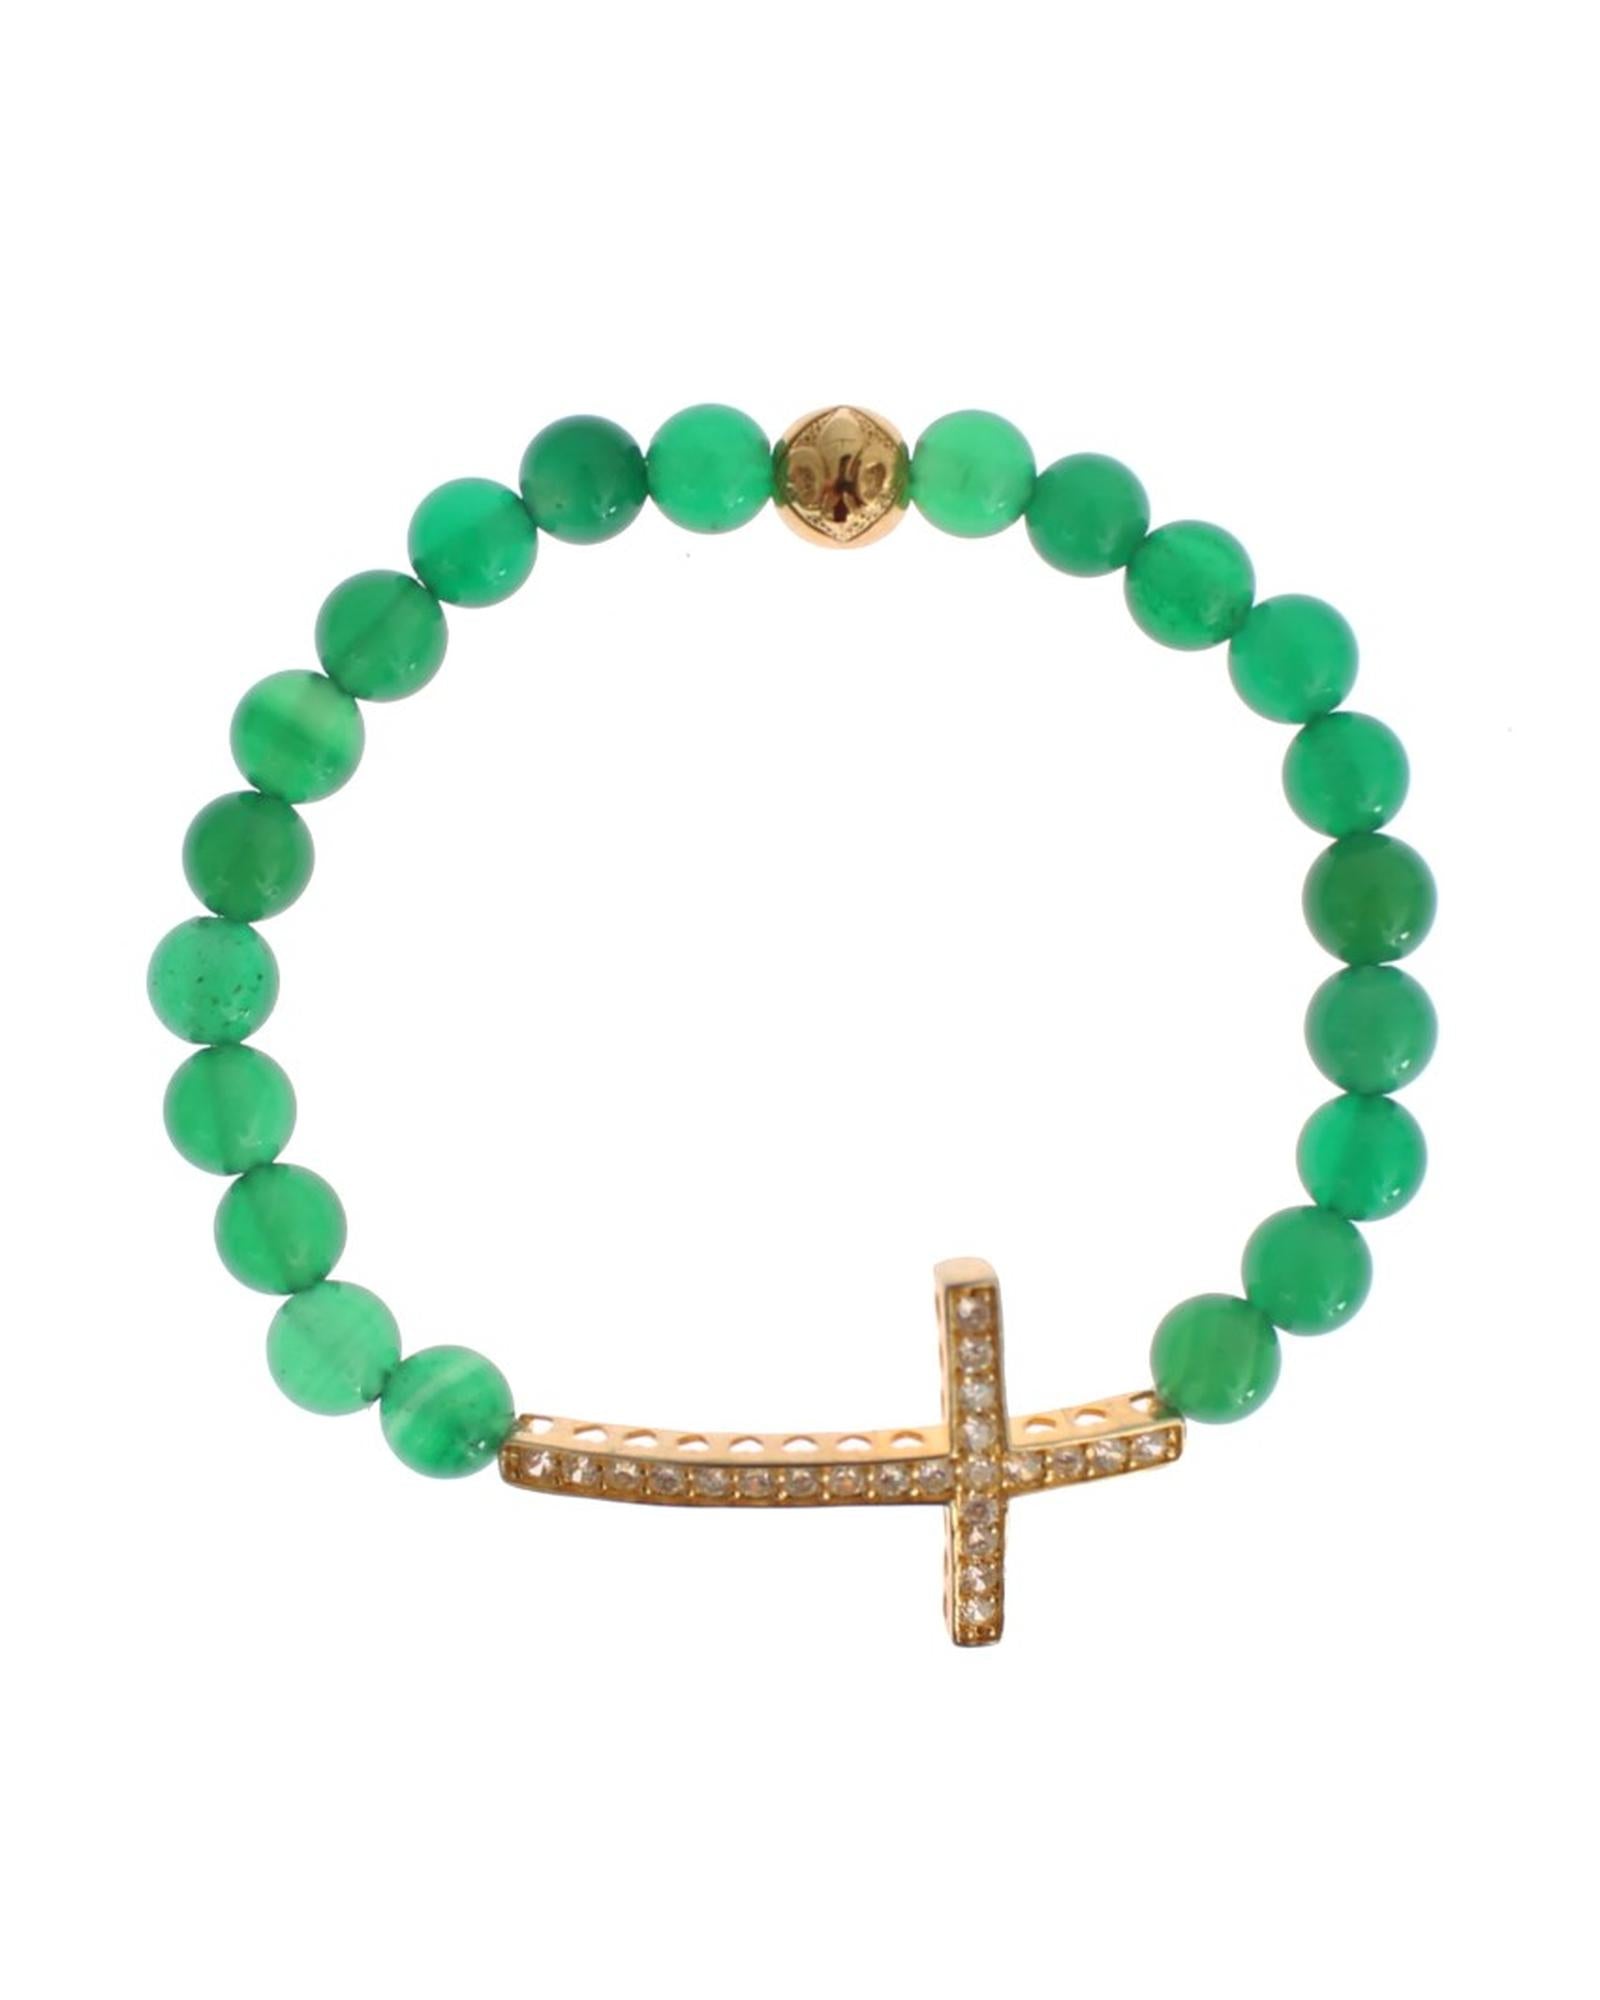 Green Jade Bead Bracelet with CZ Diamond Cross XS Women